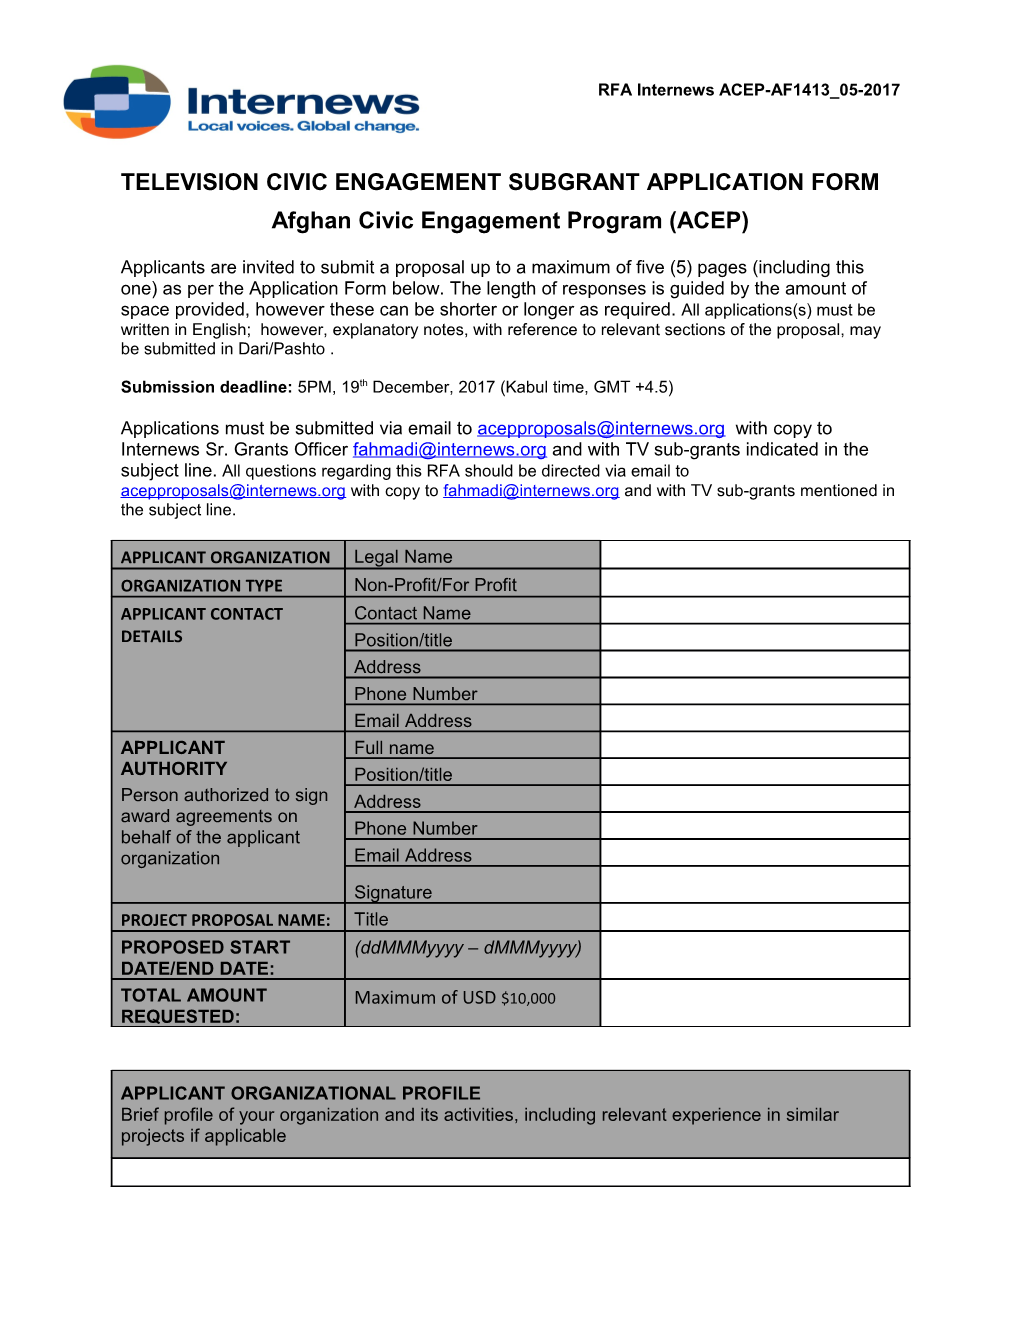 Television Civic Engagement Subgrant Application Form